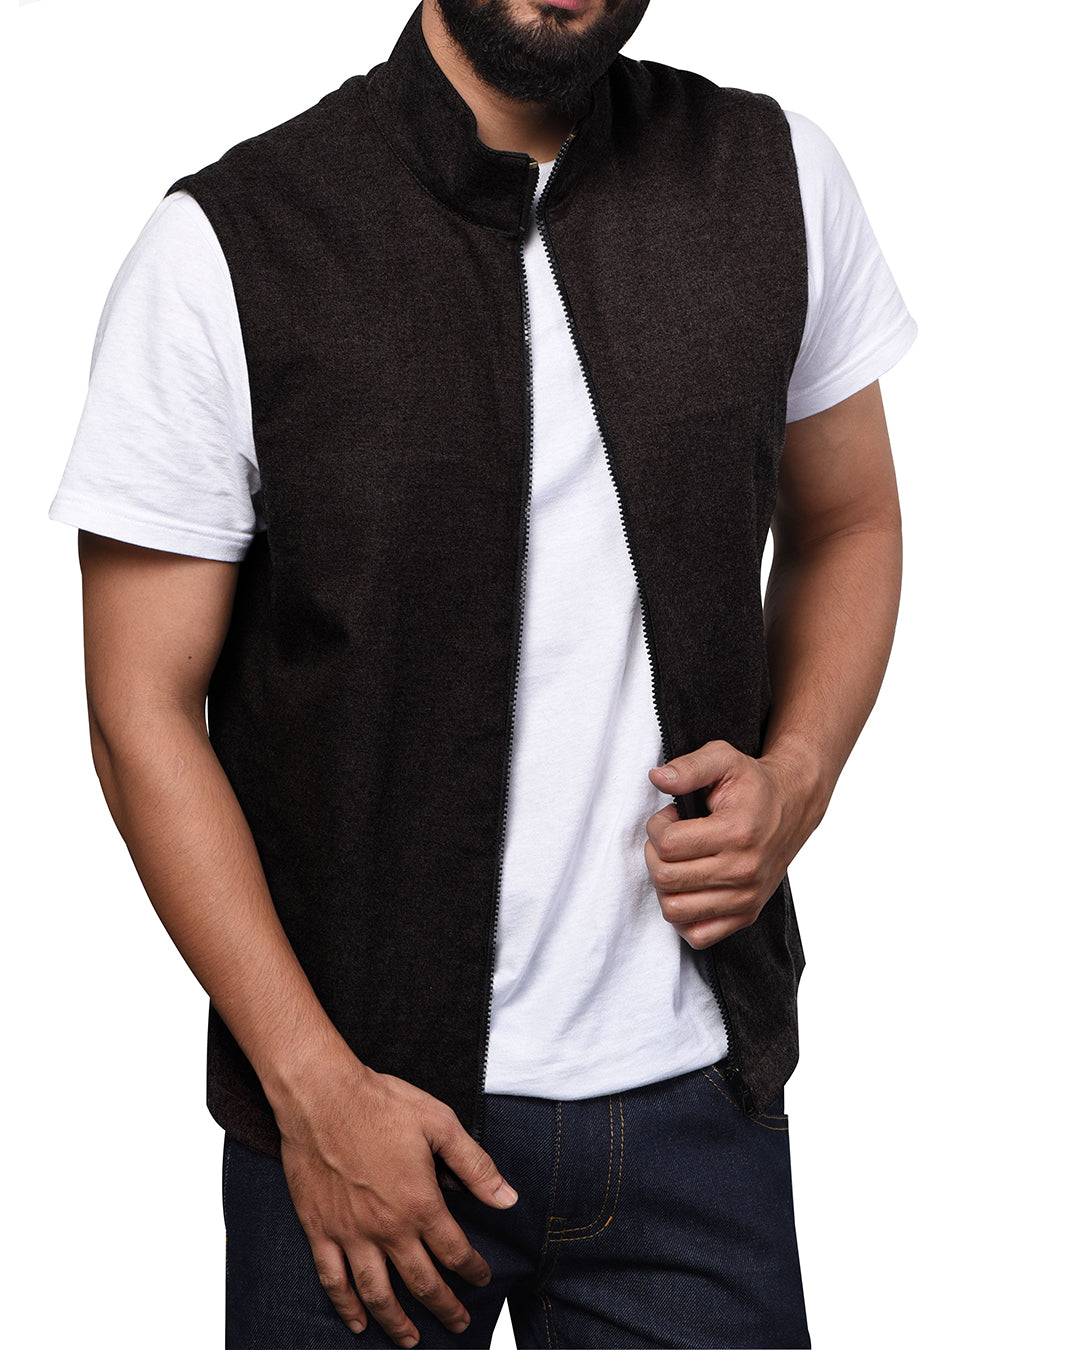 Vest in Charcoal Grey 100% Wool Flannel